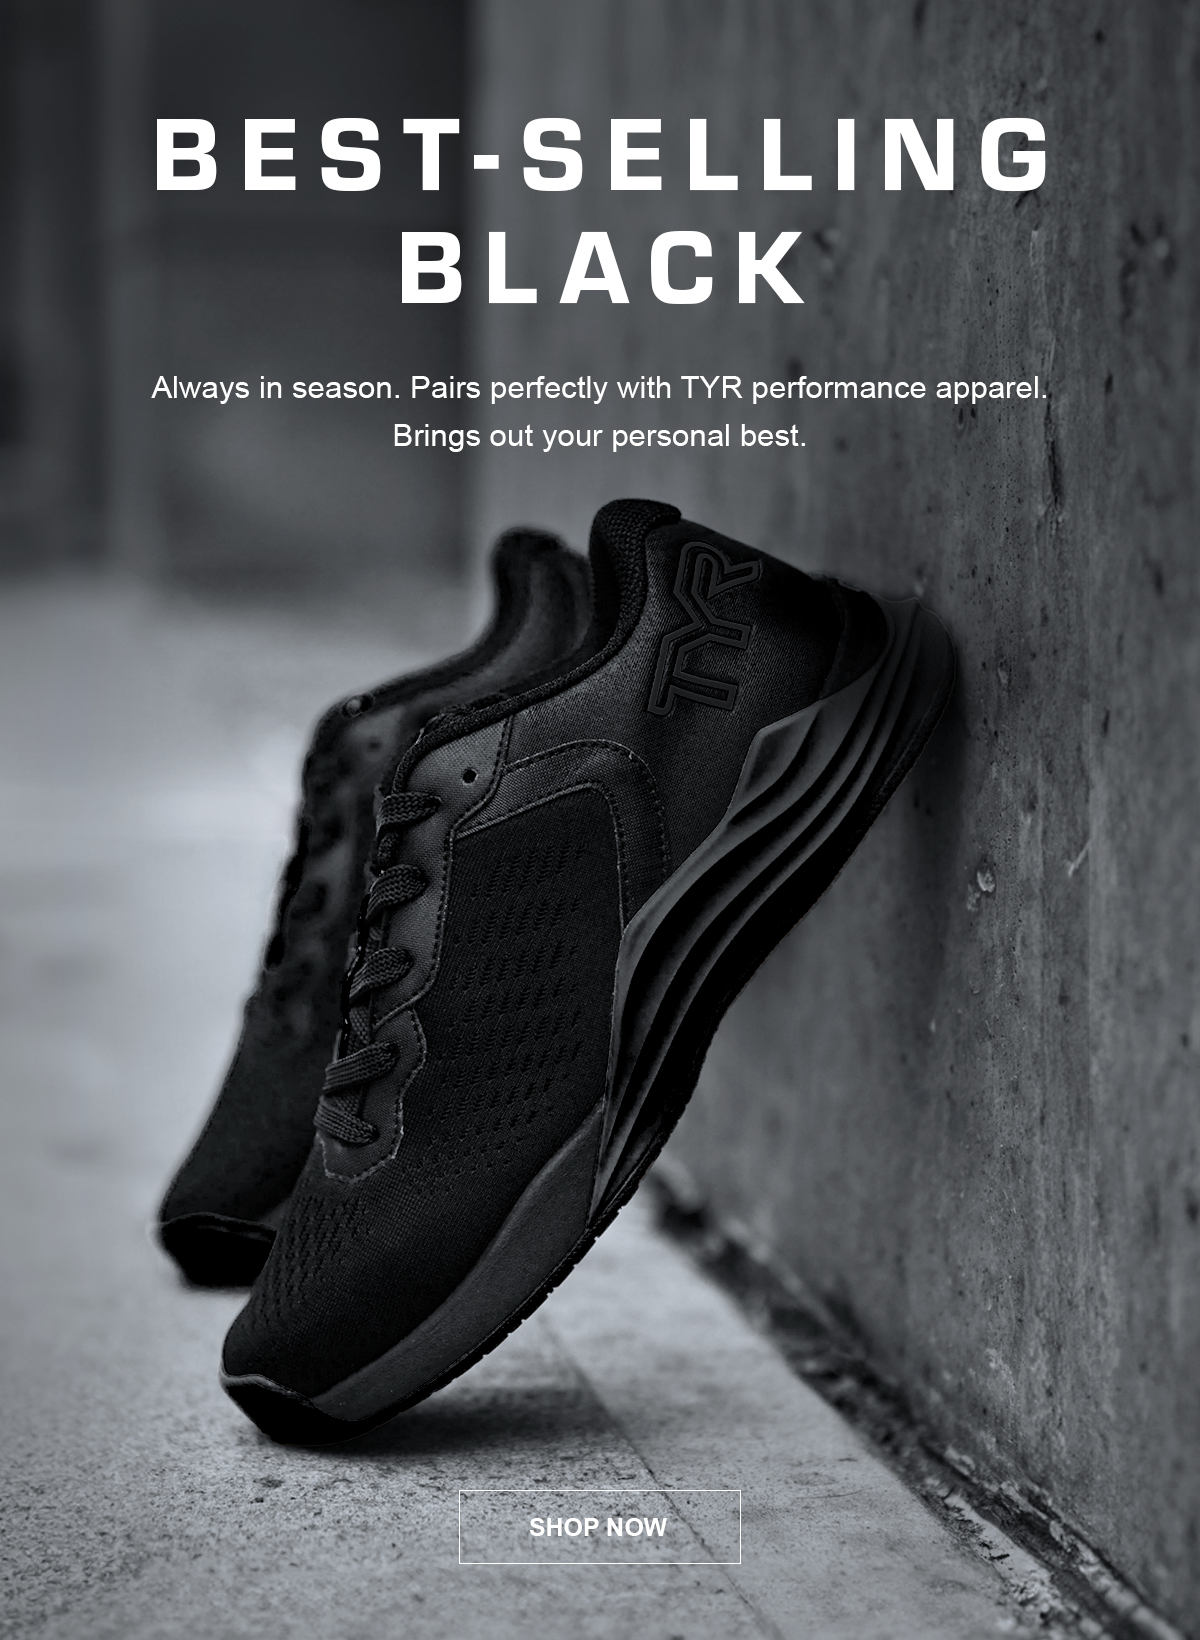 CXT-1 Trainer: Go-to footwear in Black